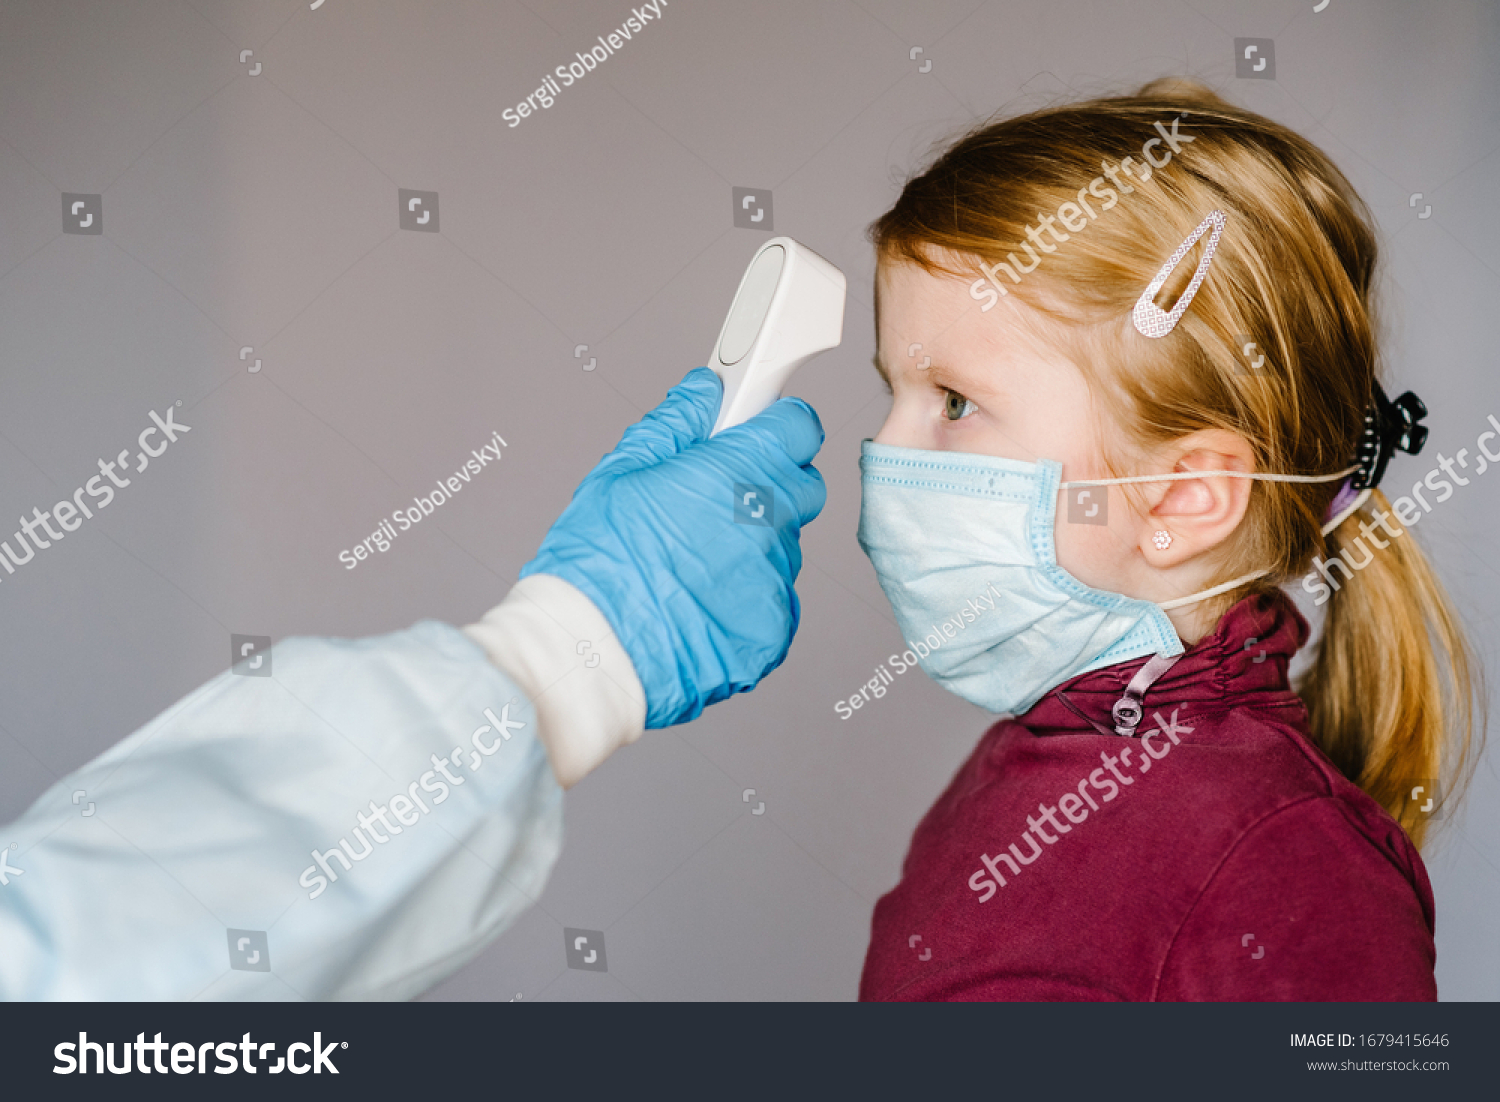 Coronavirus. Nurse or doctor checks girl's body temperature using infrared forehead thermometer (gun) for virus symptom - epidemic outbreak concept. High temperature. #1679415646